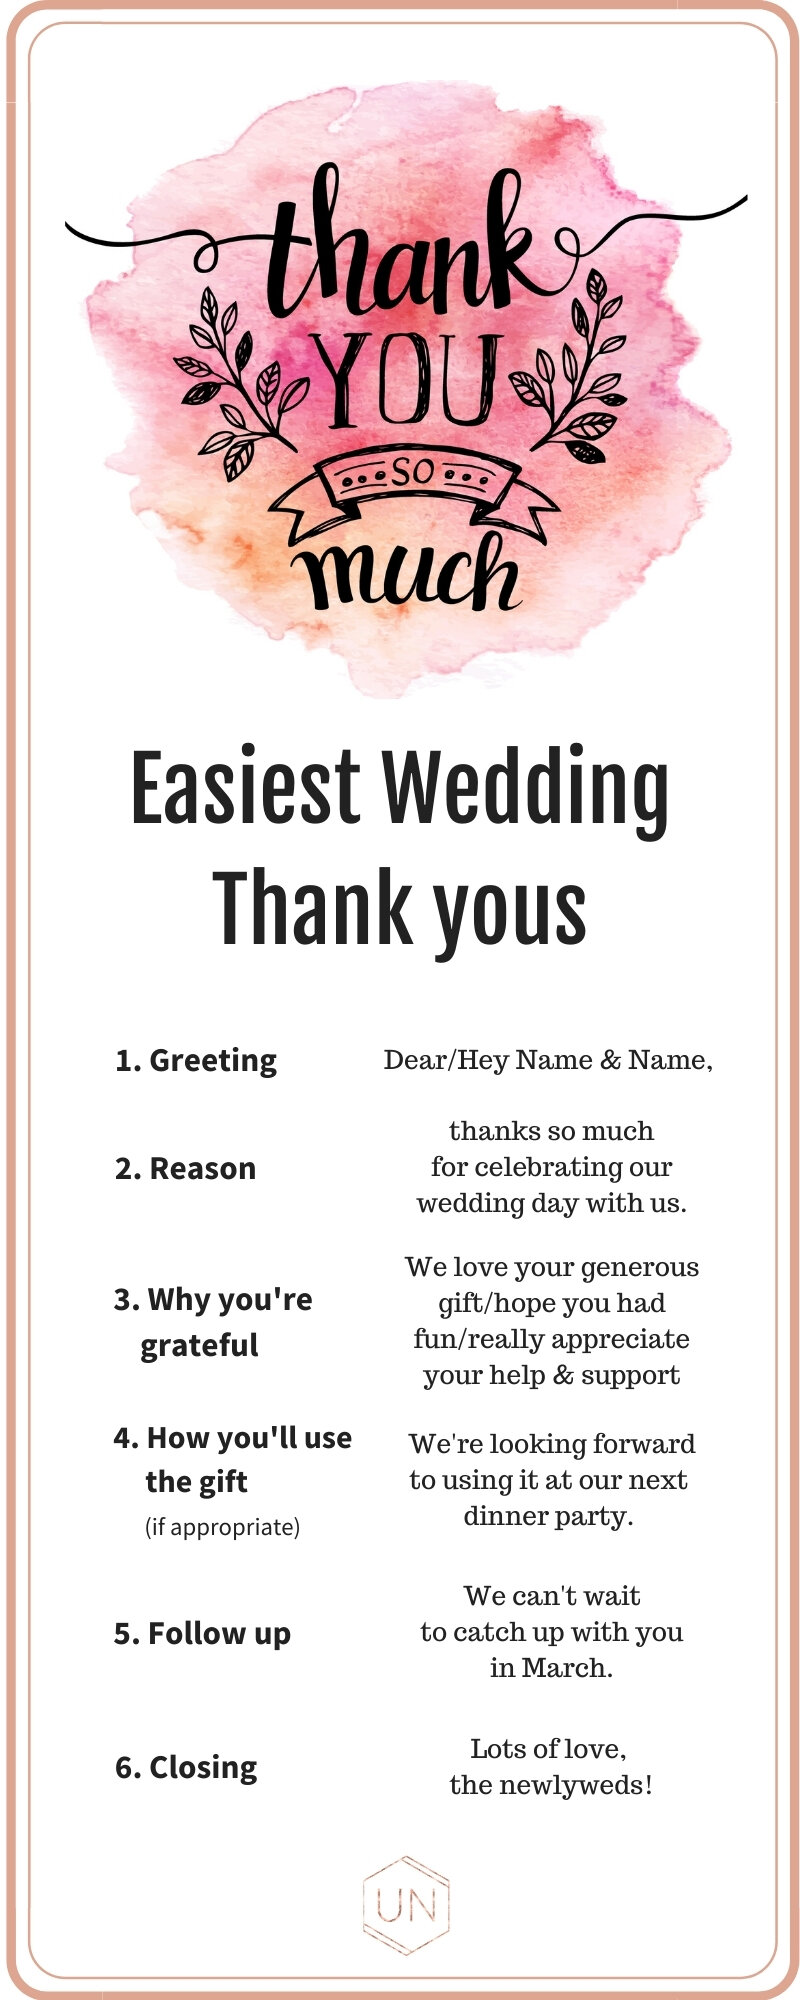 Wedding thank you card wording template — unbridely Throughout Template For Wedding Thank You Cards